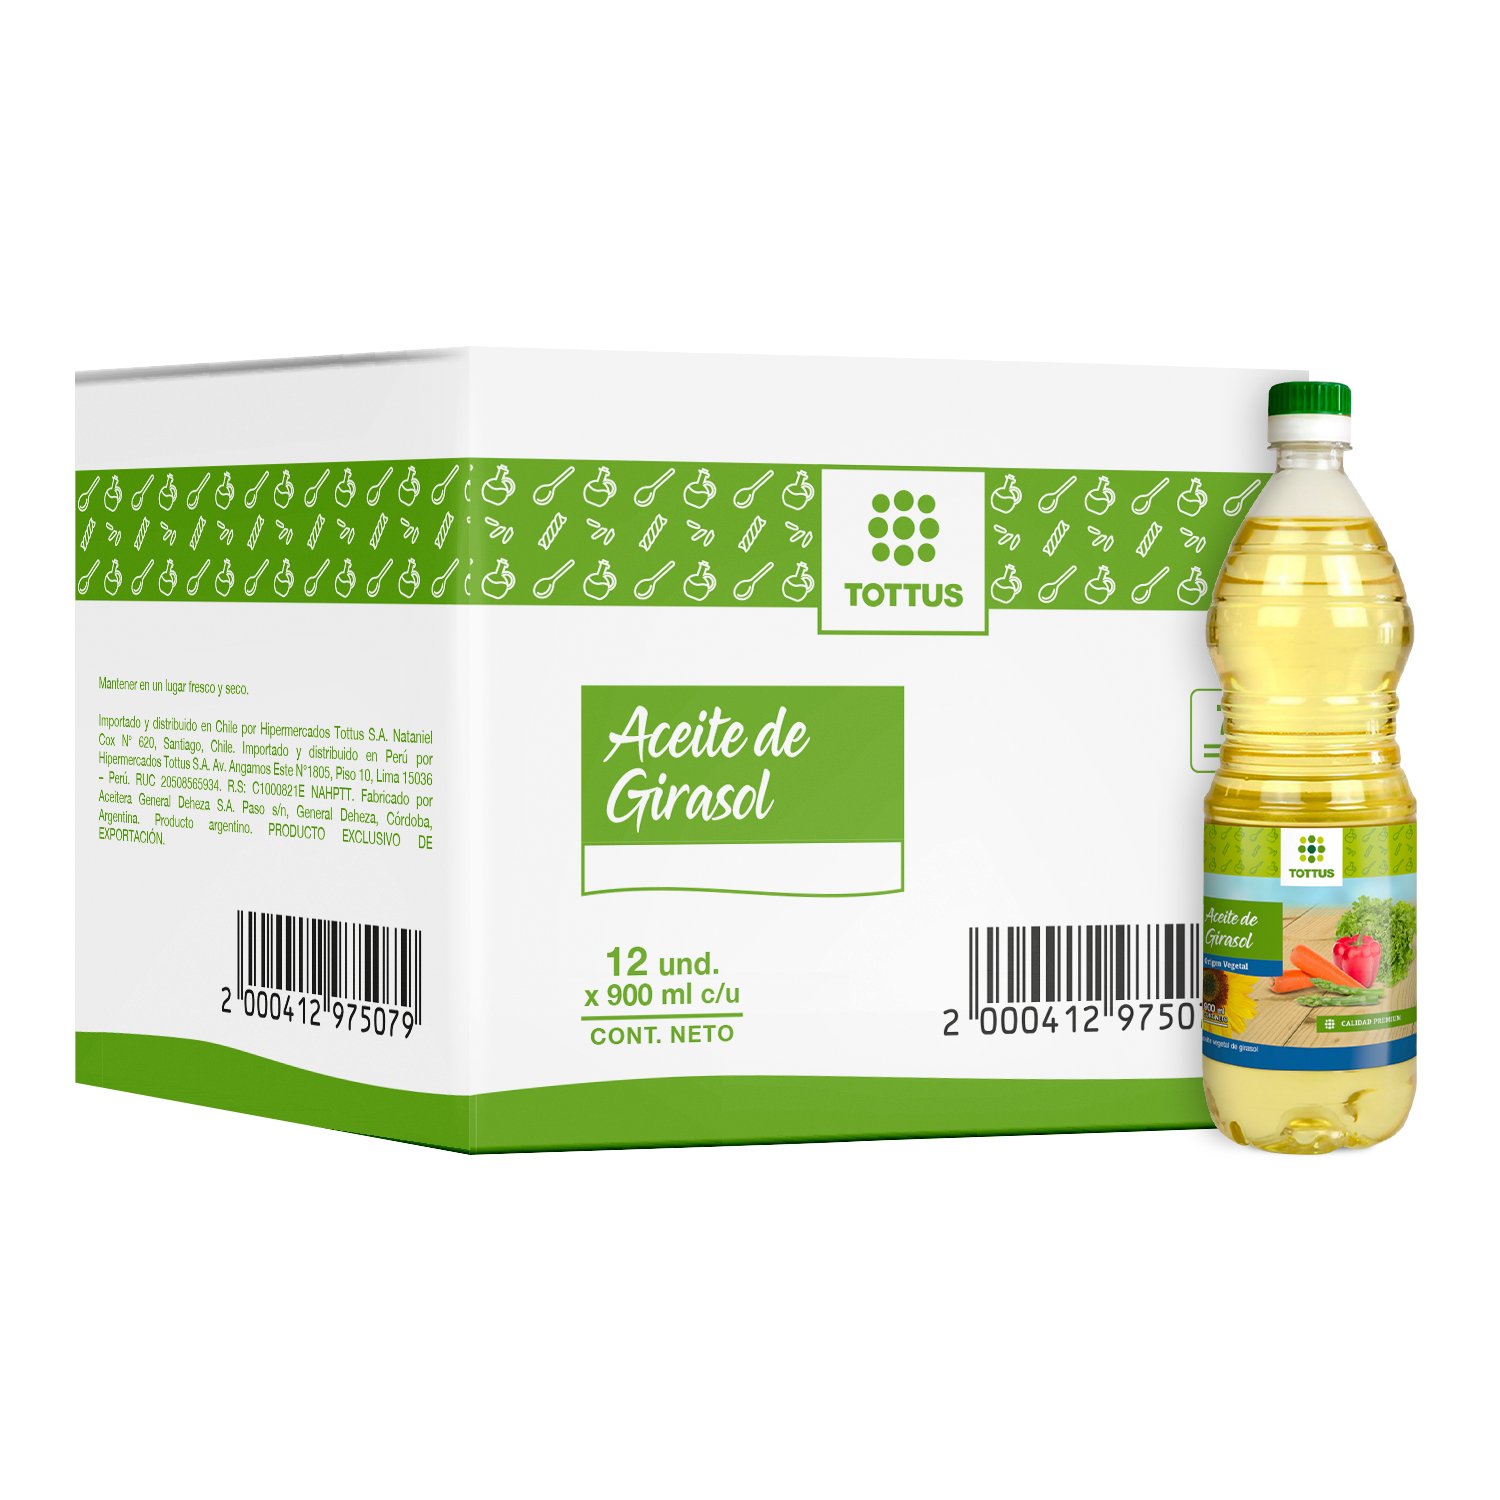 Aceite vegetal Maravilla 12 botellas de 1 L